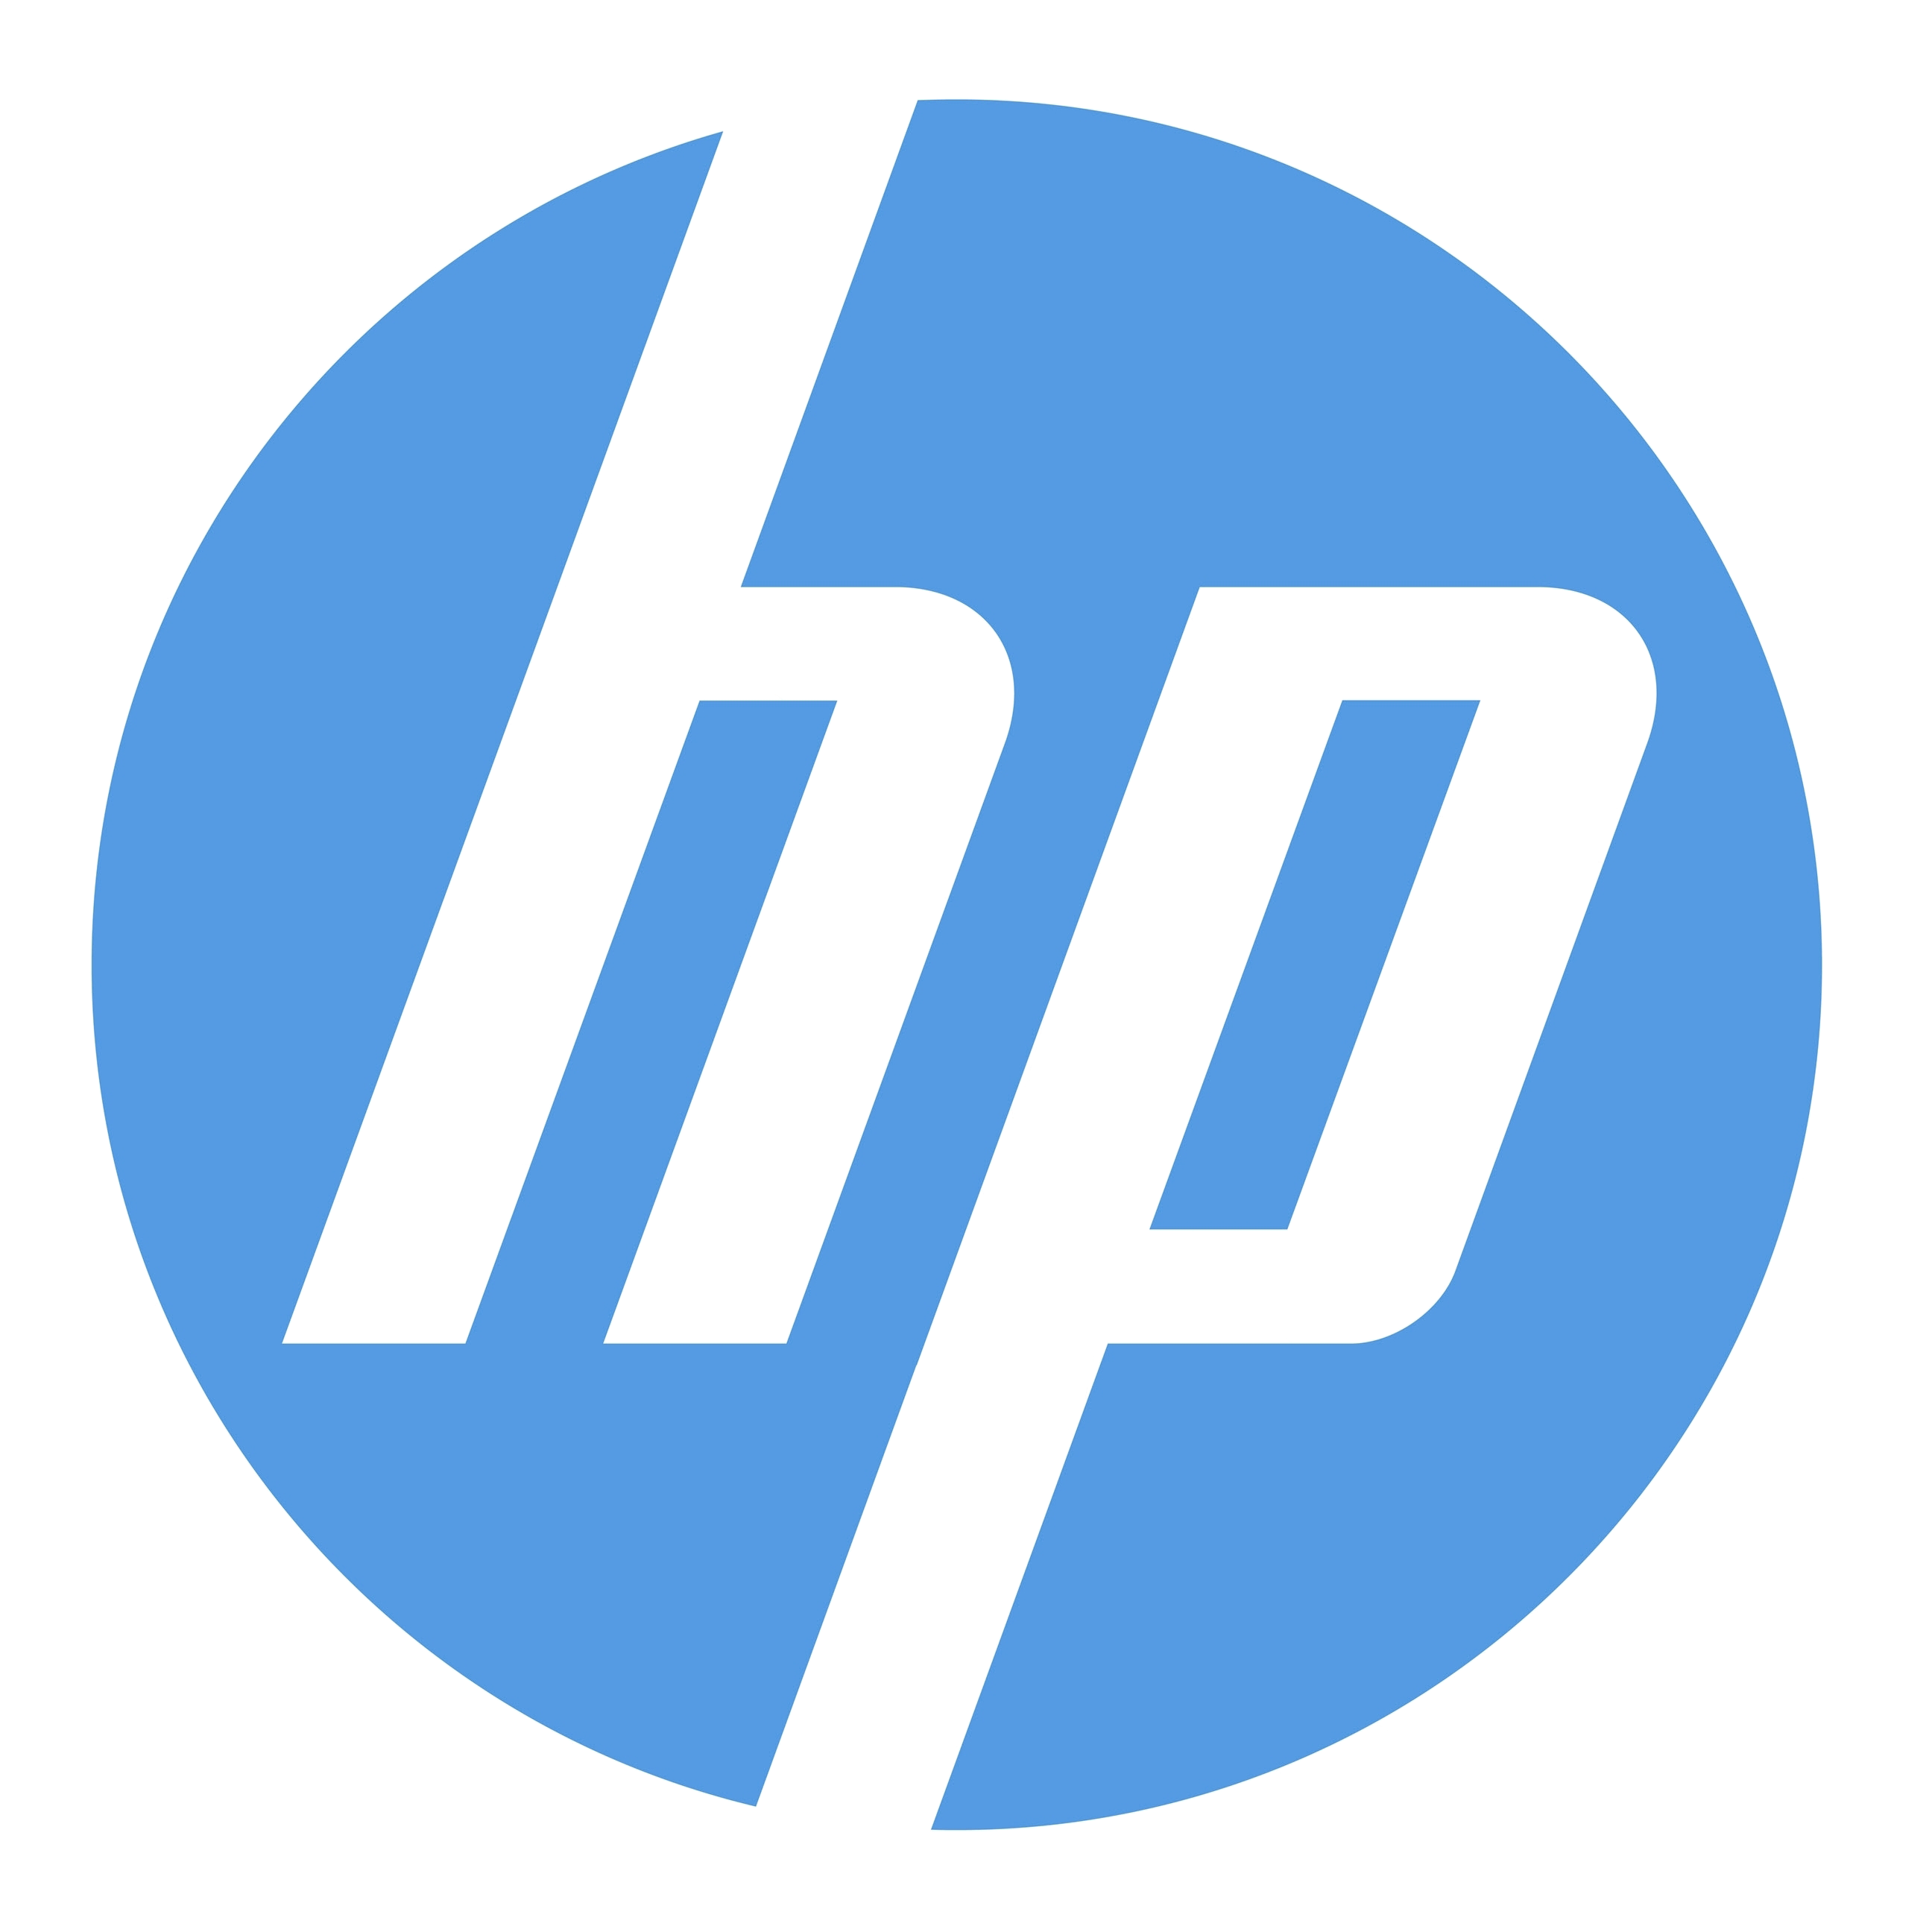 Imagen PNG del logotipo de HP - PurePNG | Biblioteca de imágenes PNG CC0 transparente gratuita